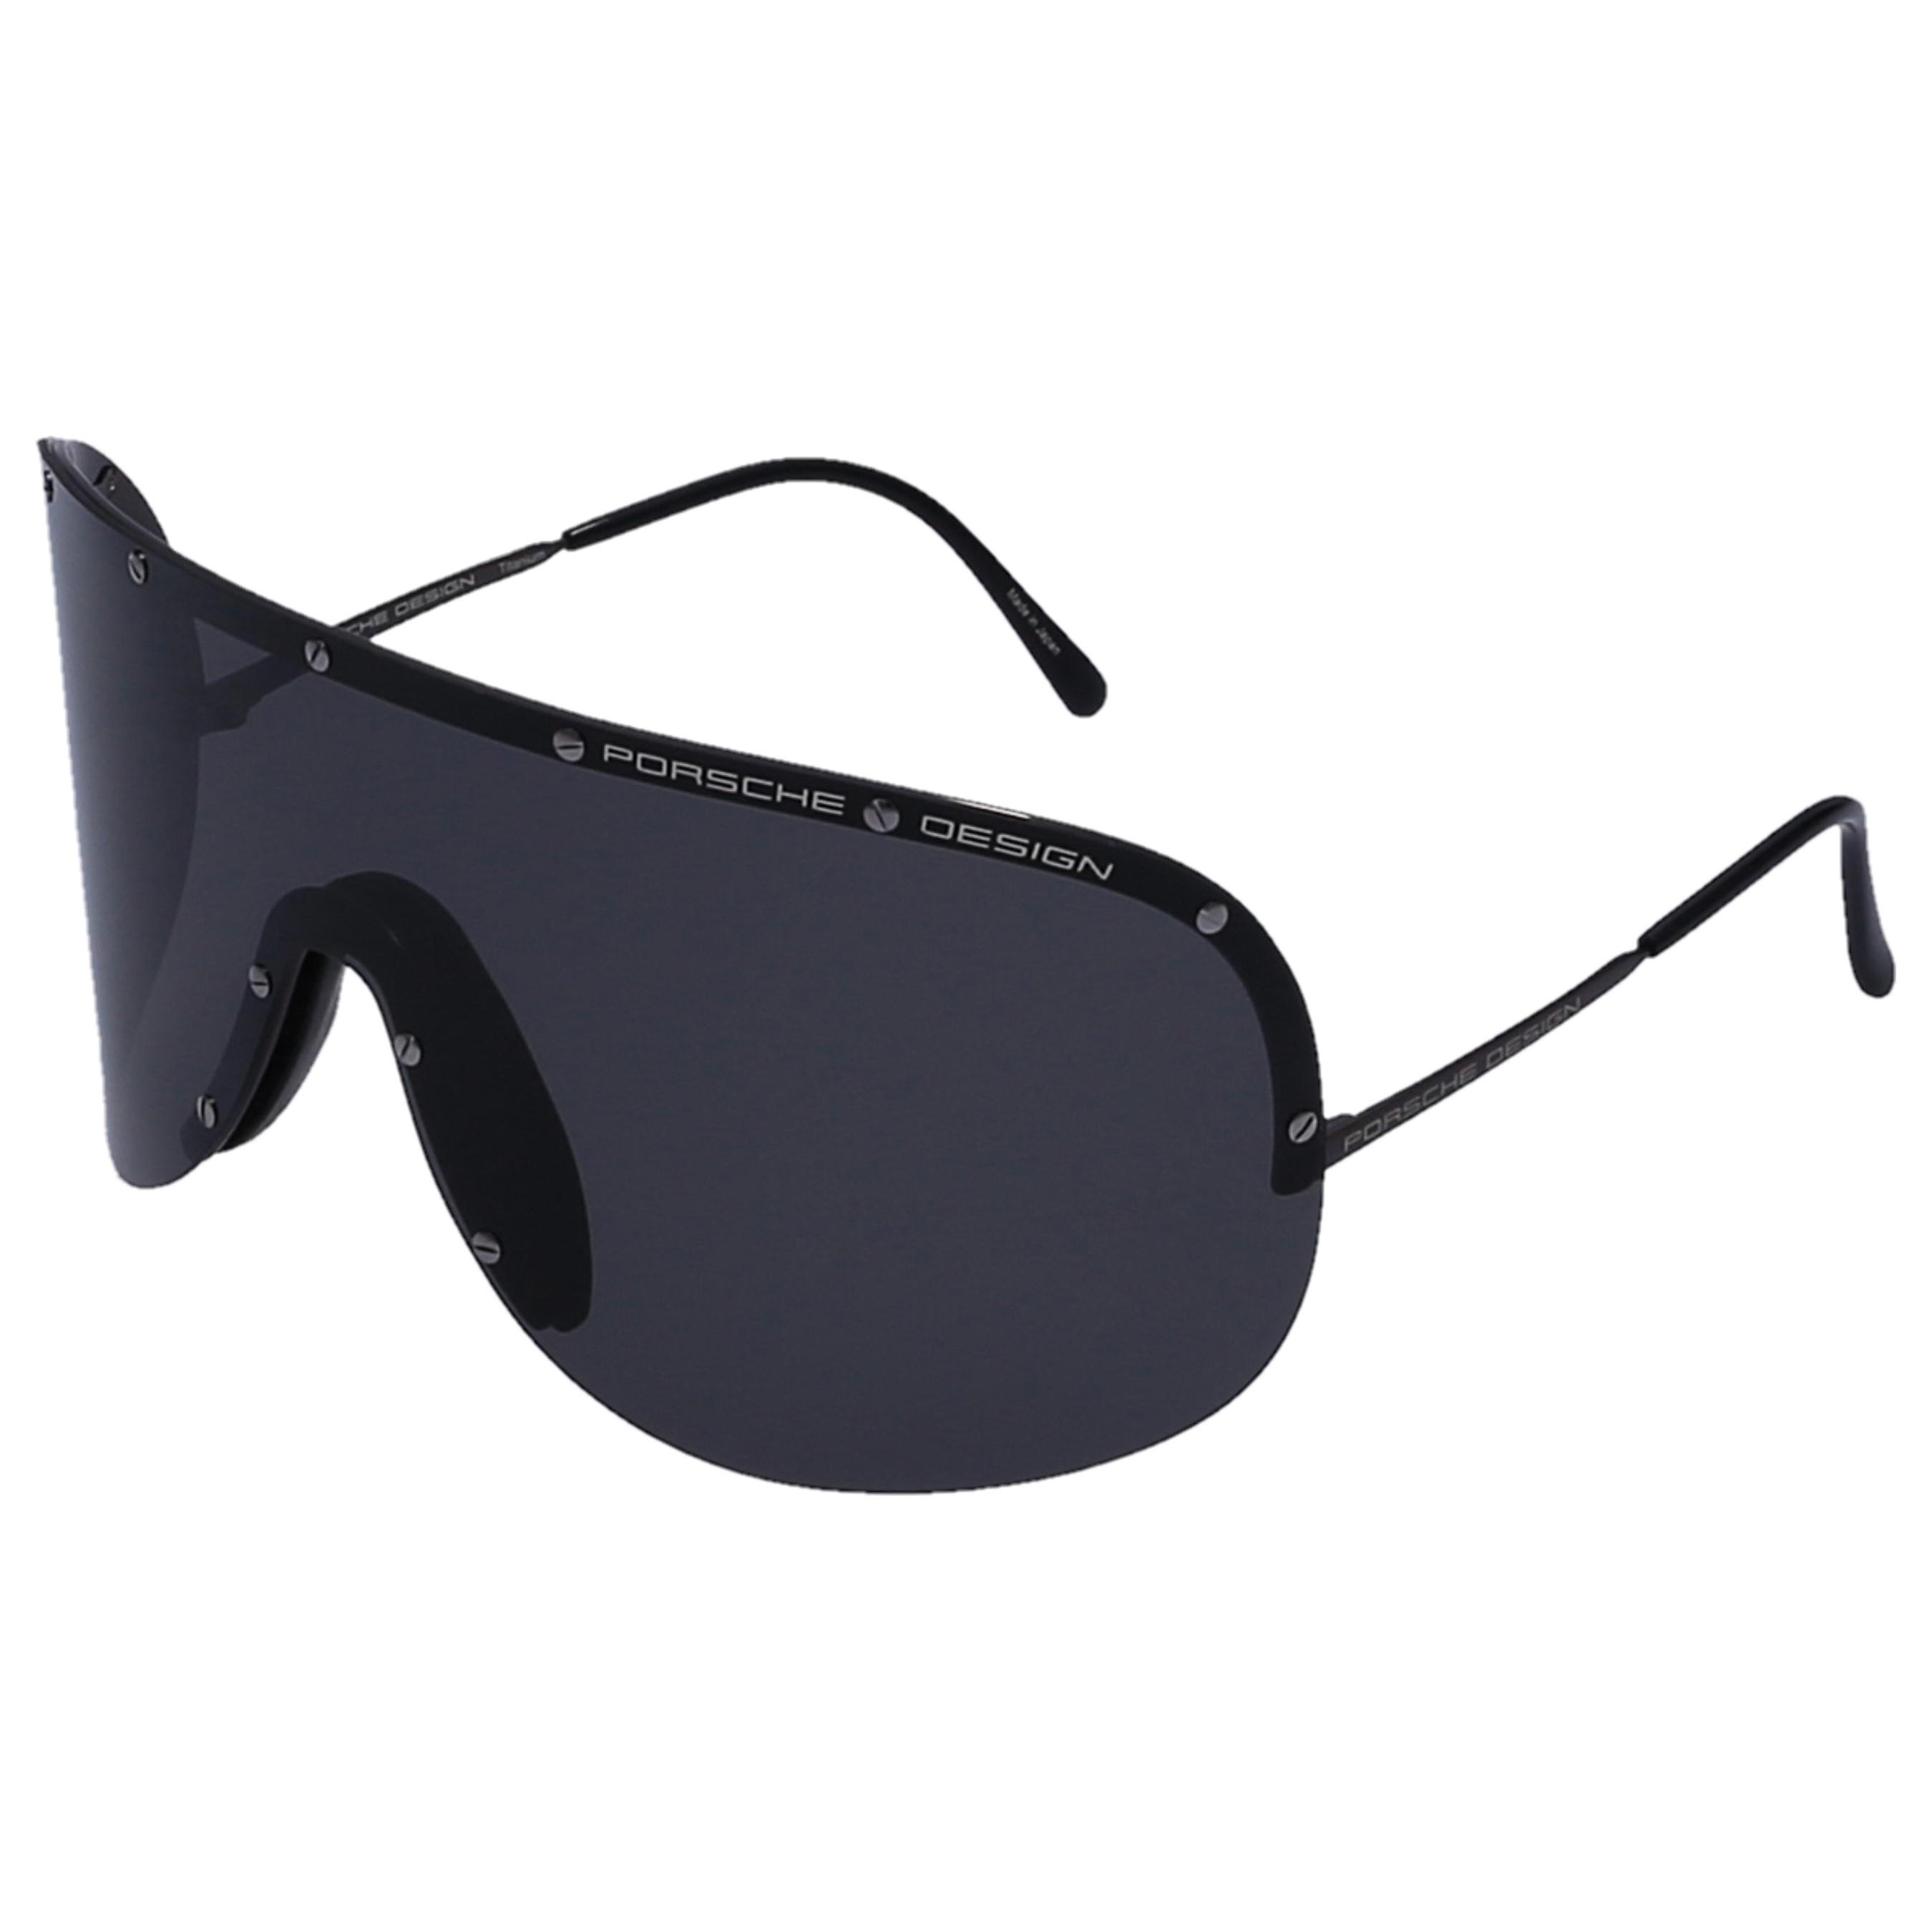 Porsche Design Sunglasses Shield 8479 D Metal Black in White for Men - Lyst